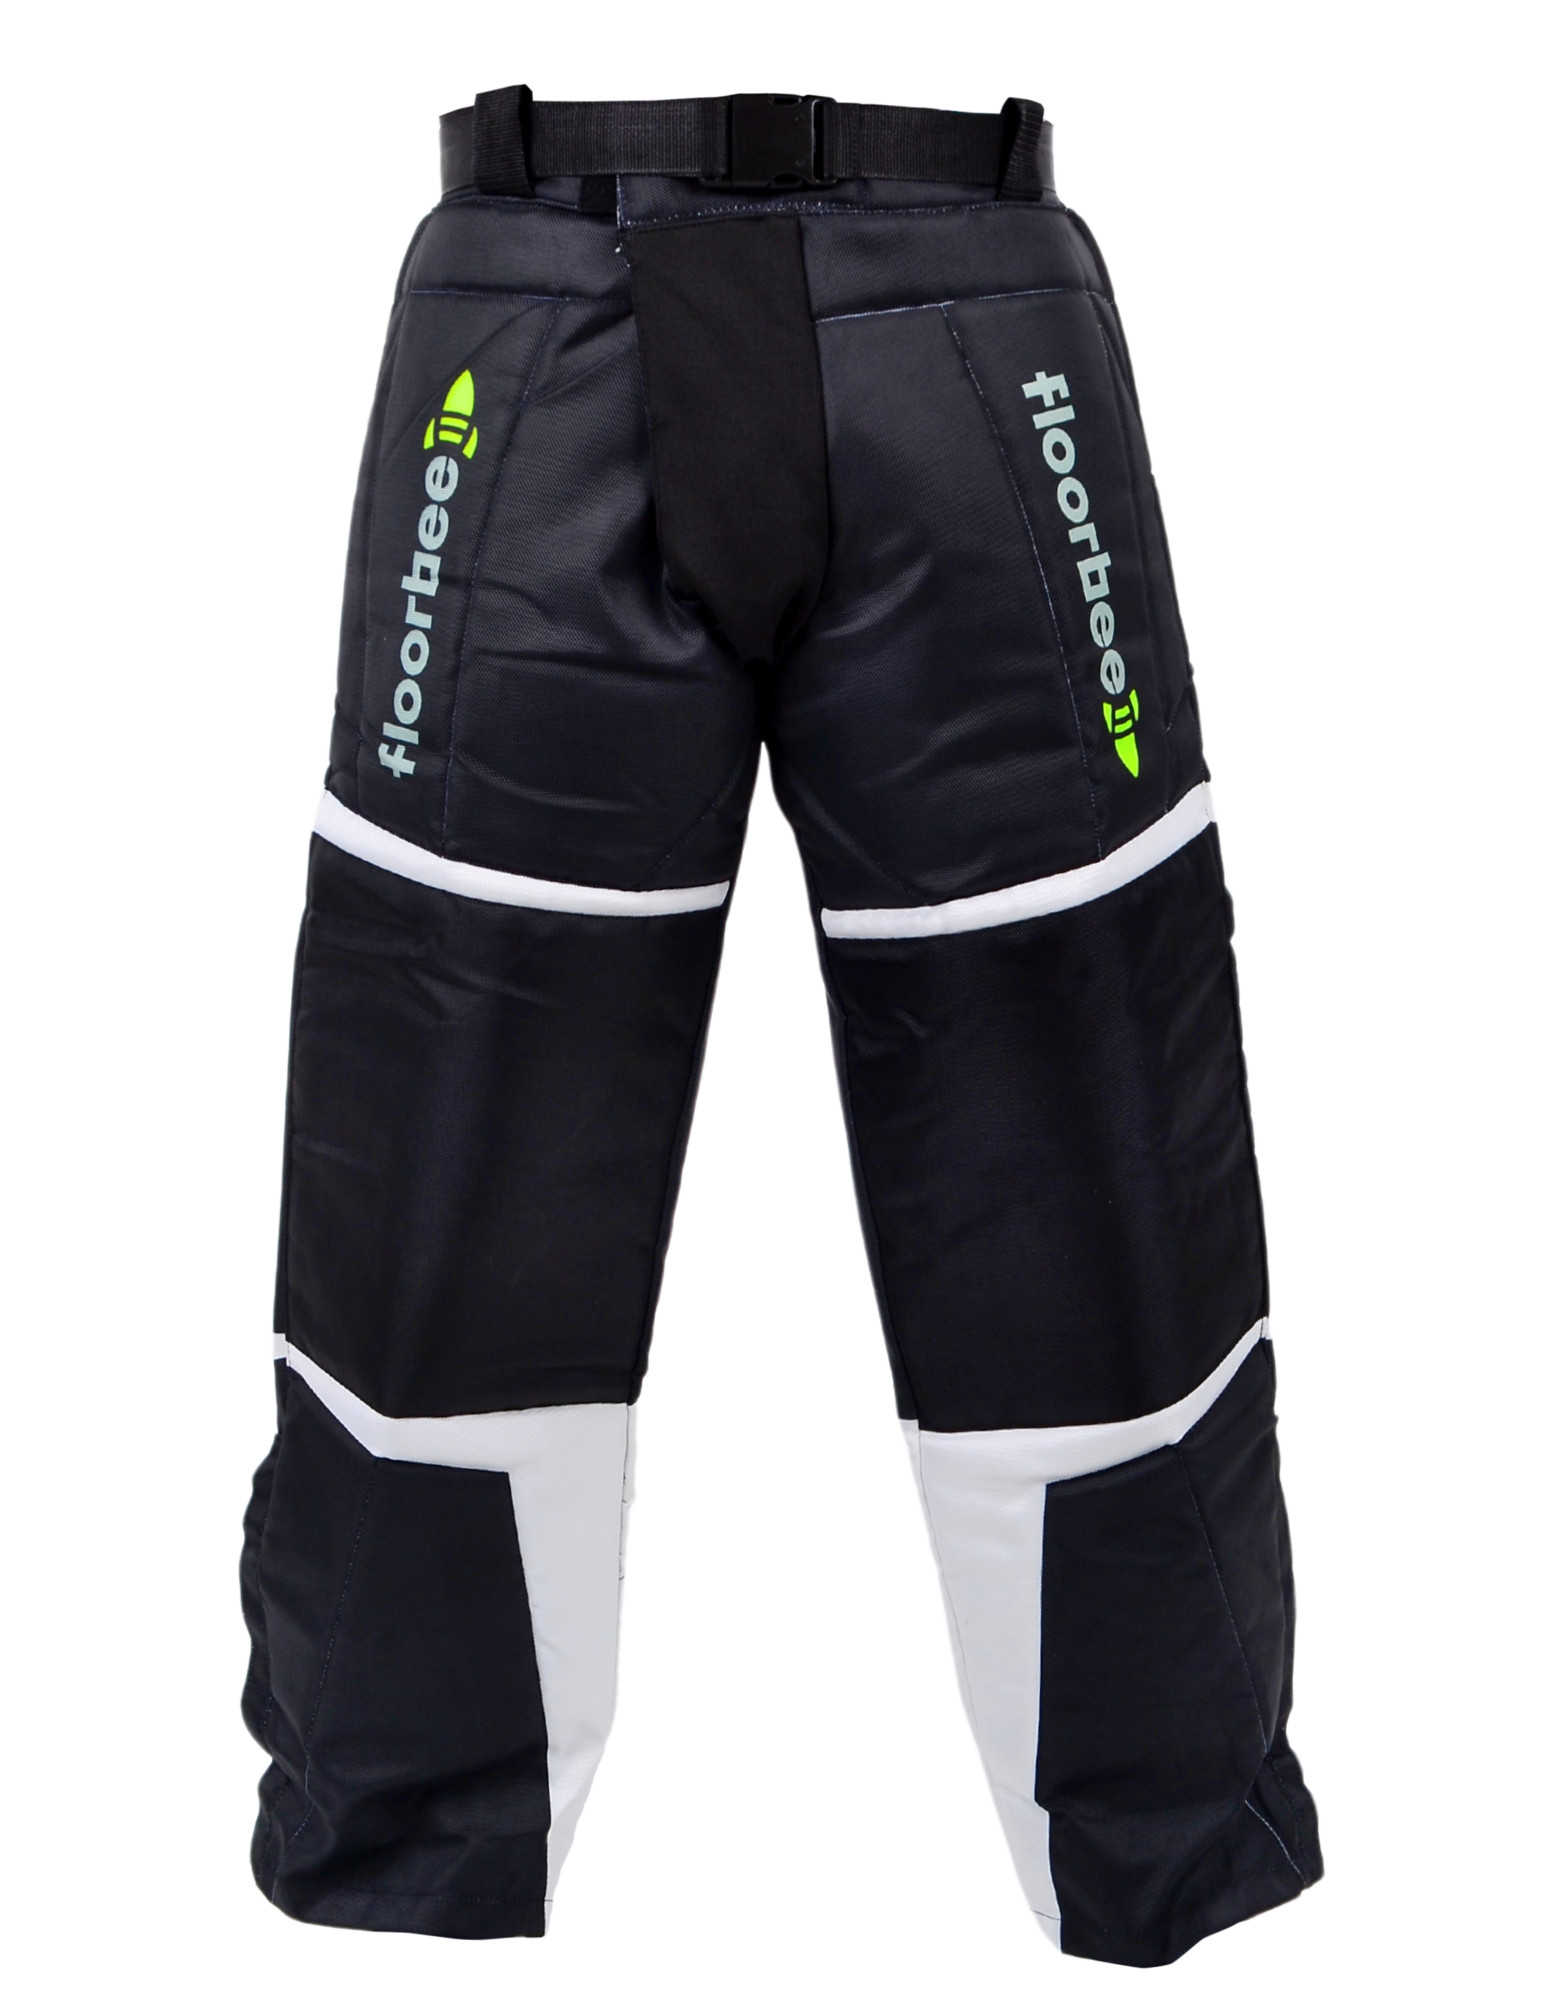 FLOORBEE Goalie Armor Pants 3.0 - black/white M, černá / bílá